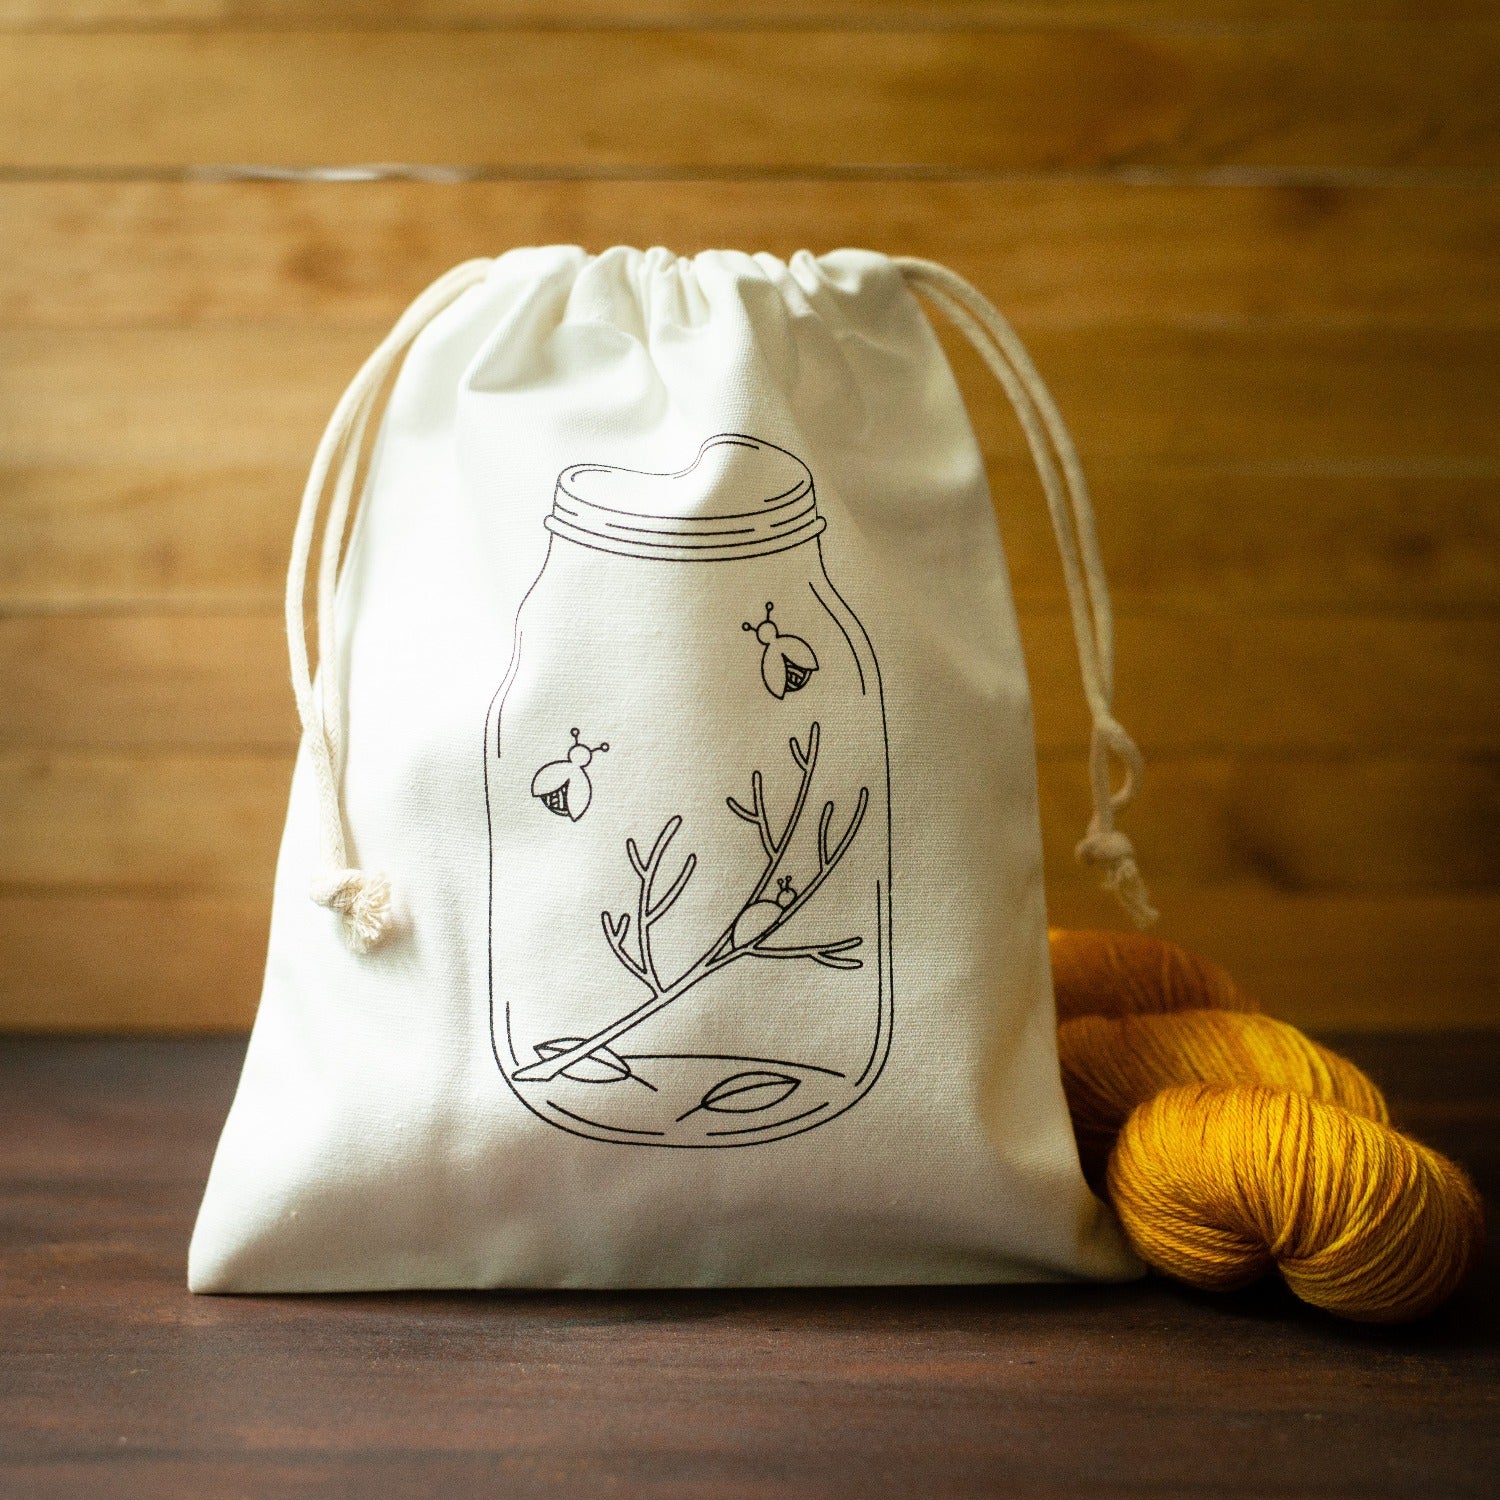 Firefly Jar Project Bag